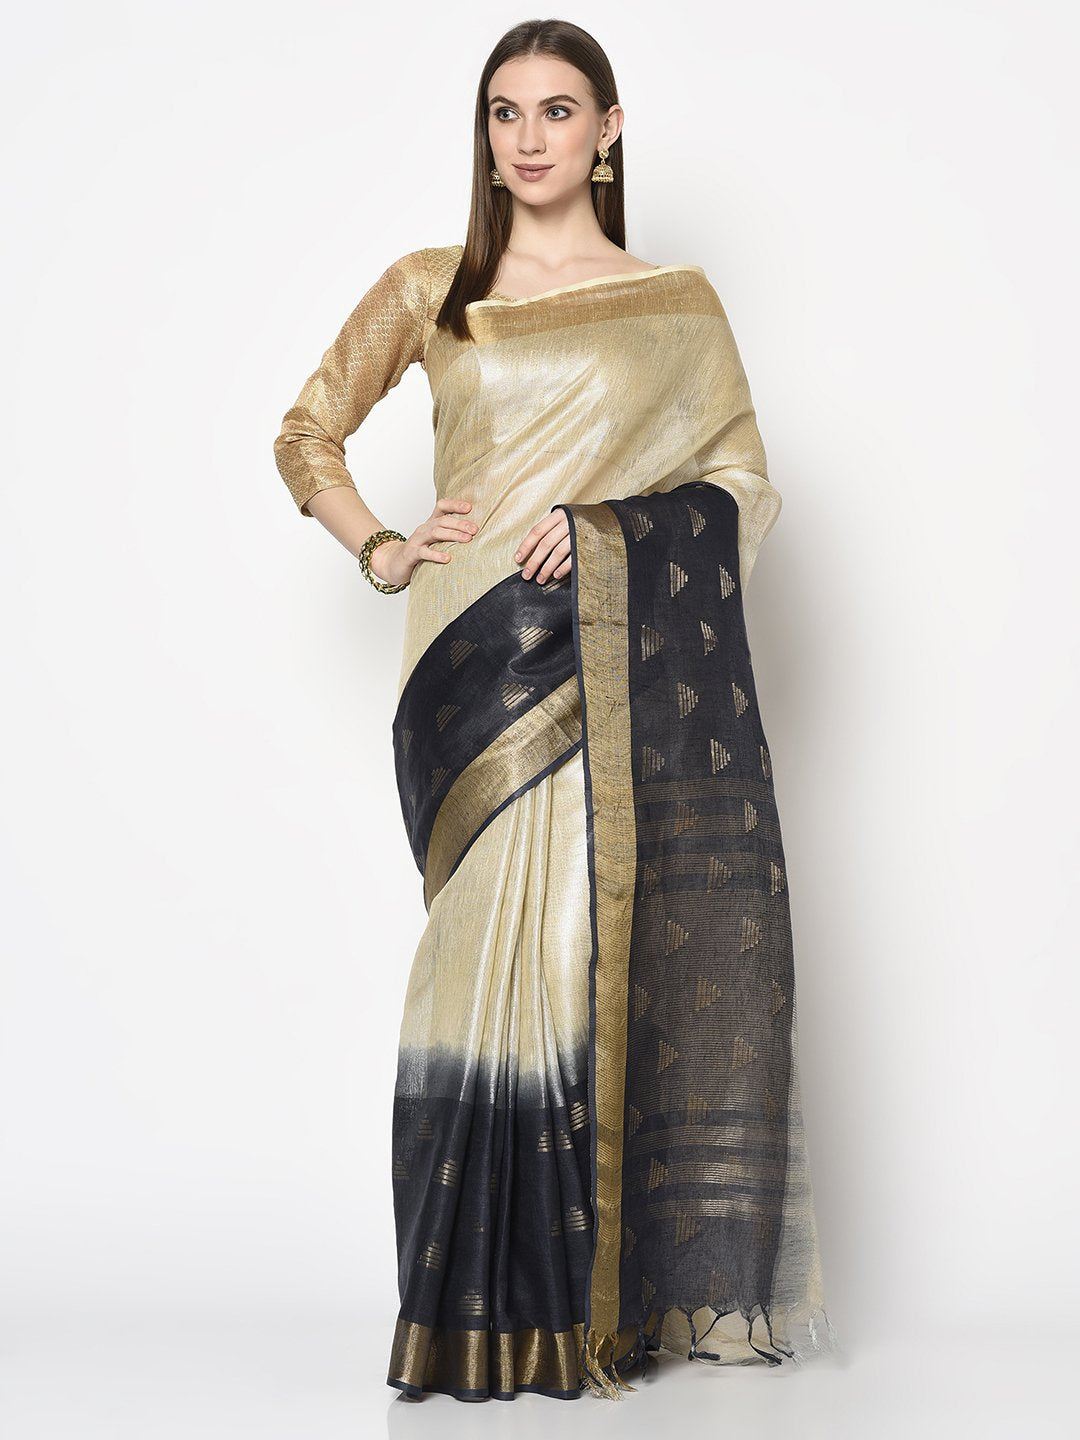 Shop Handloom Saree In Beige&Black Colour which is Saree online at simaaya At